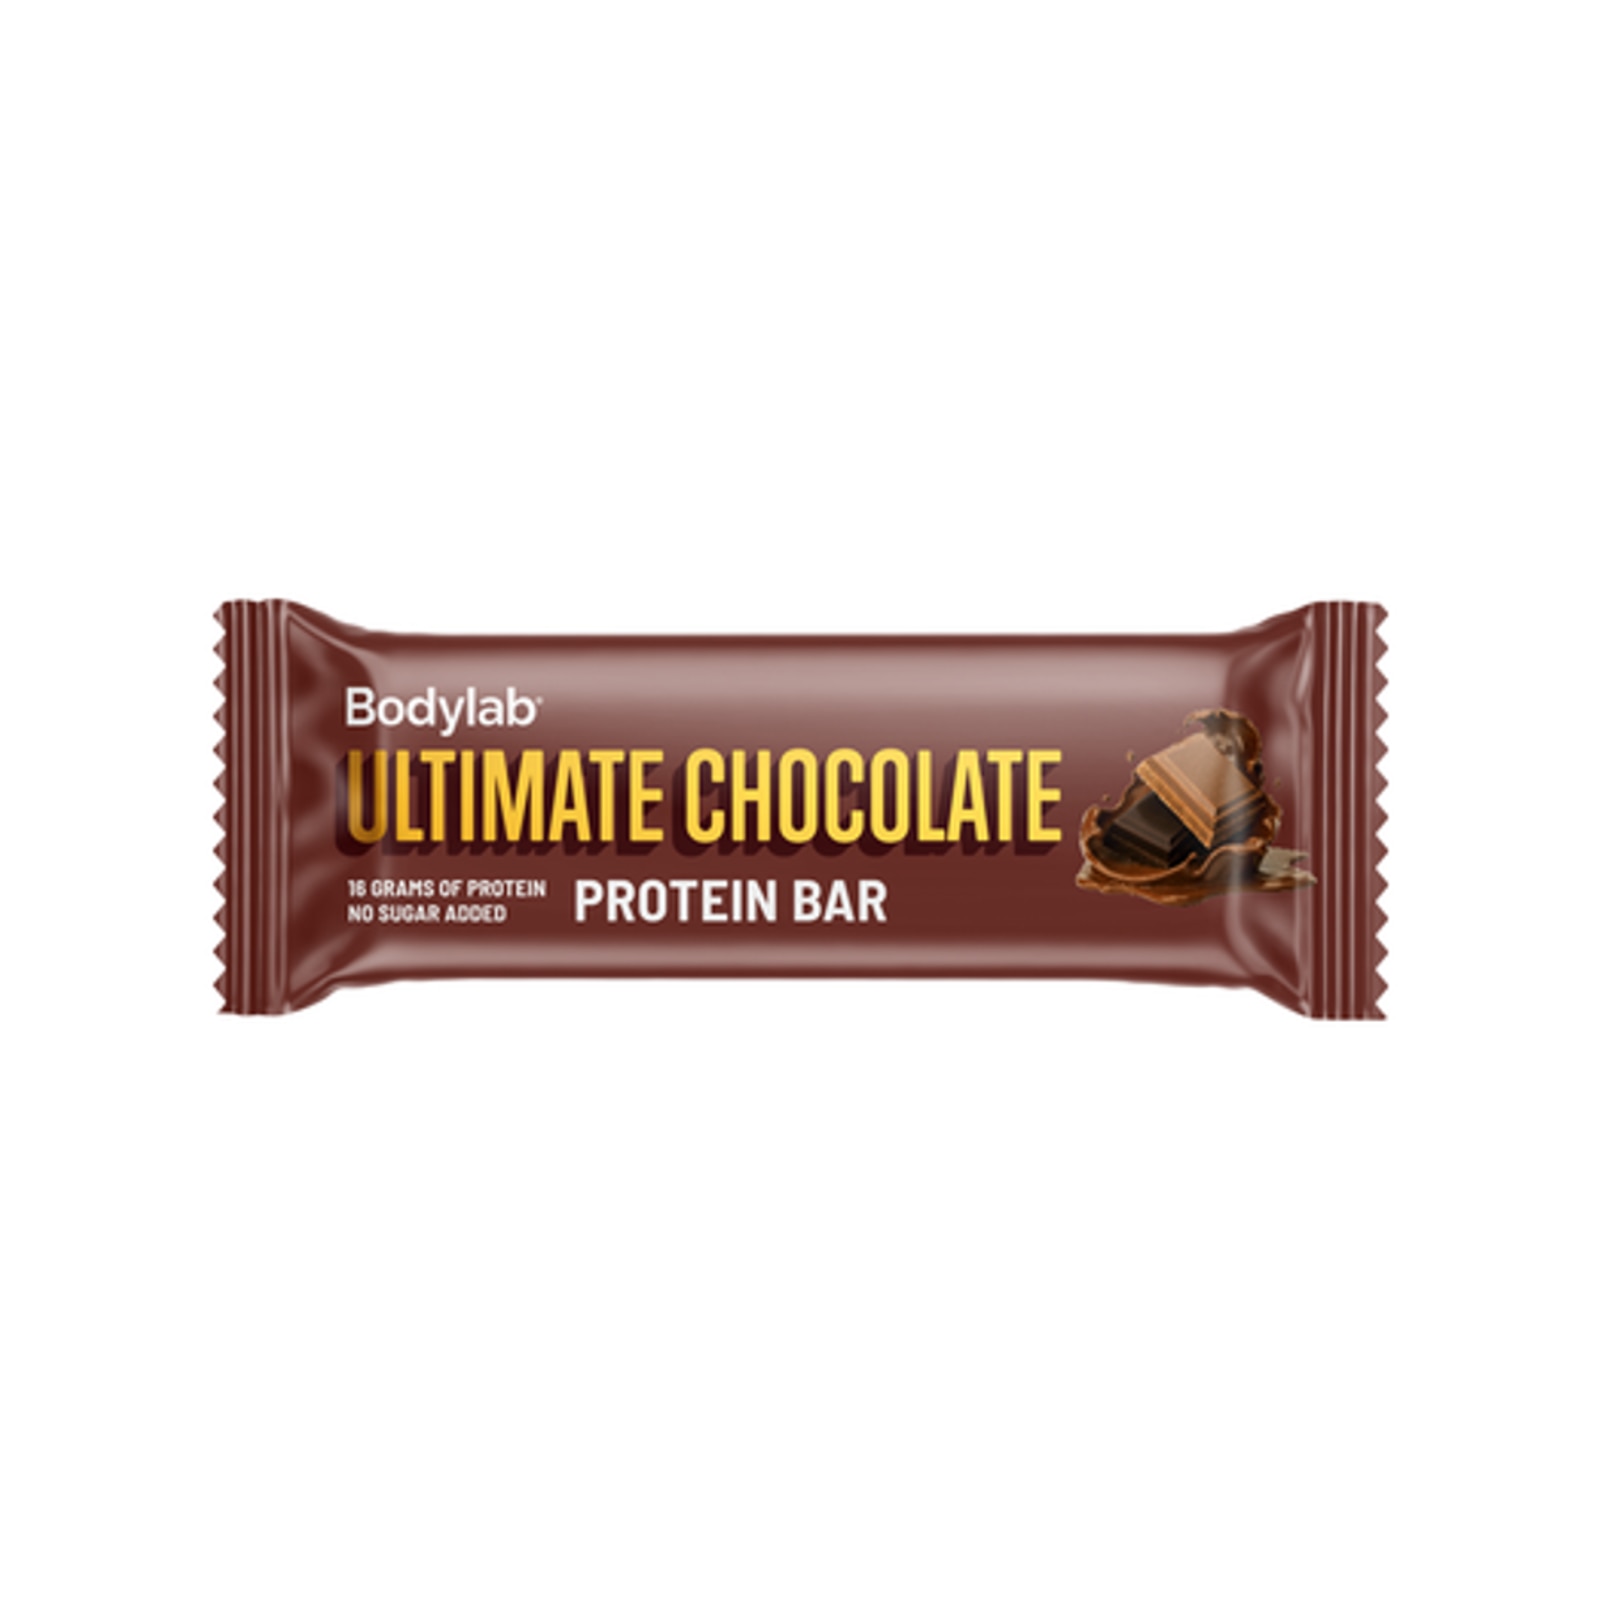 Bodylab Proteinbar ultimate chocolate